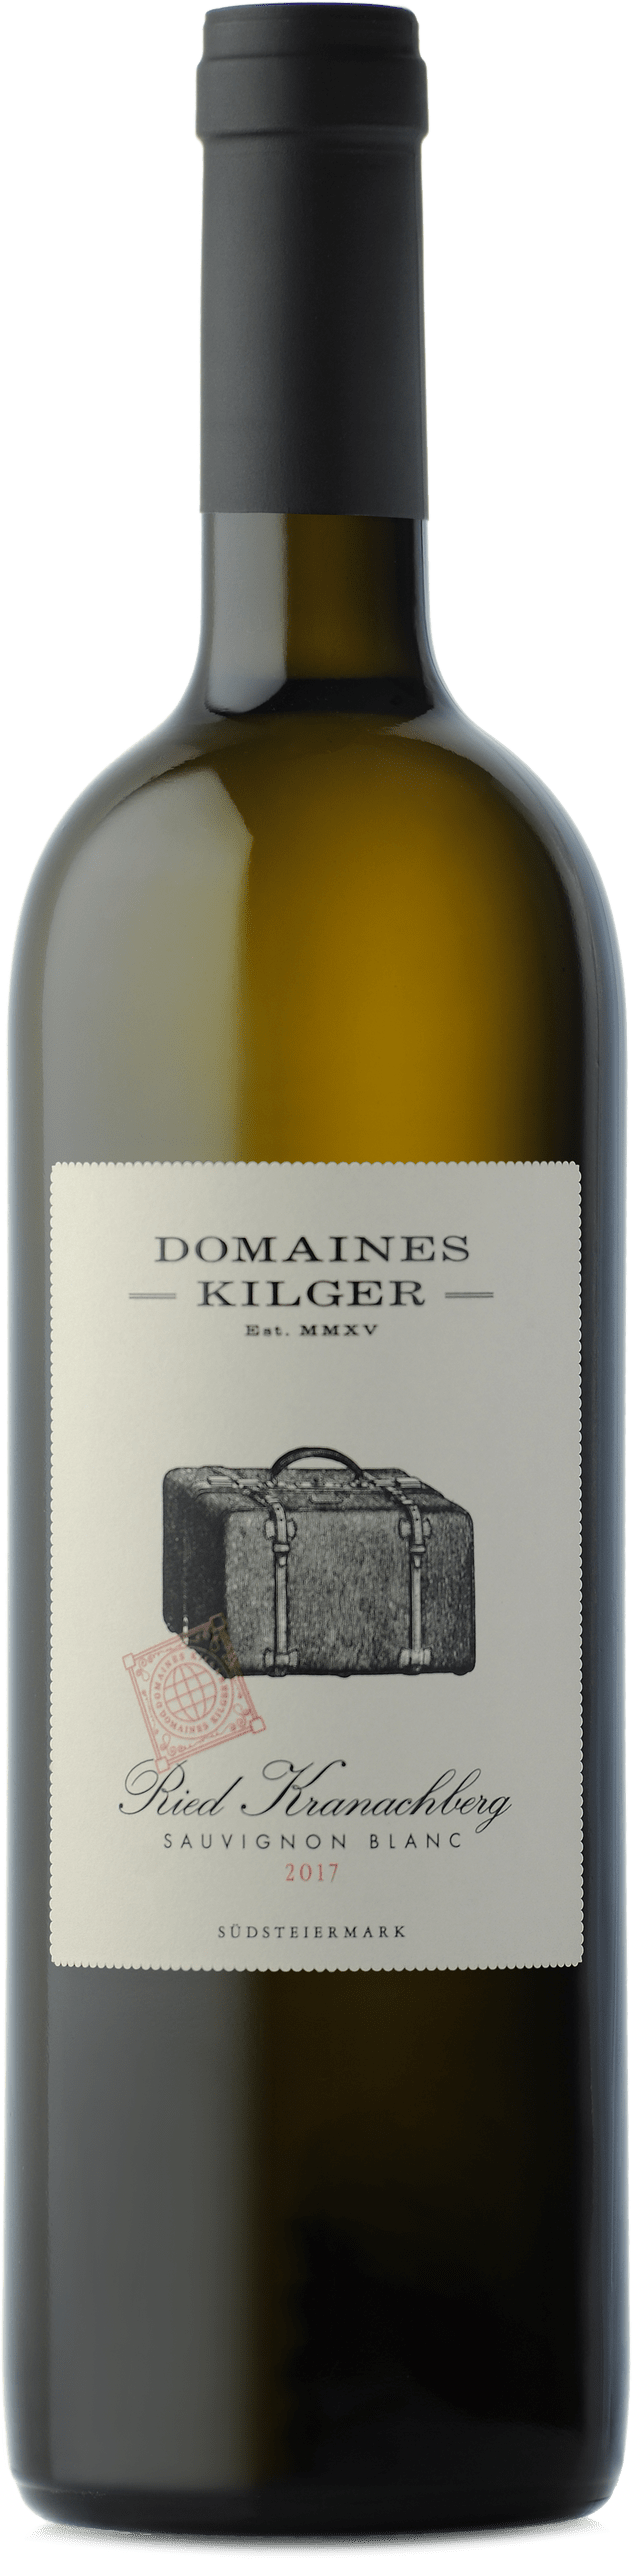 2015 Sauvignon Blanc<br>Ried KRANACHBERG